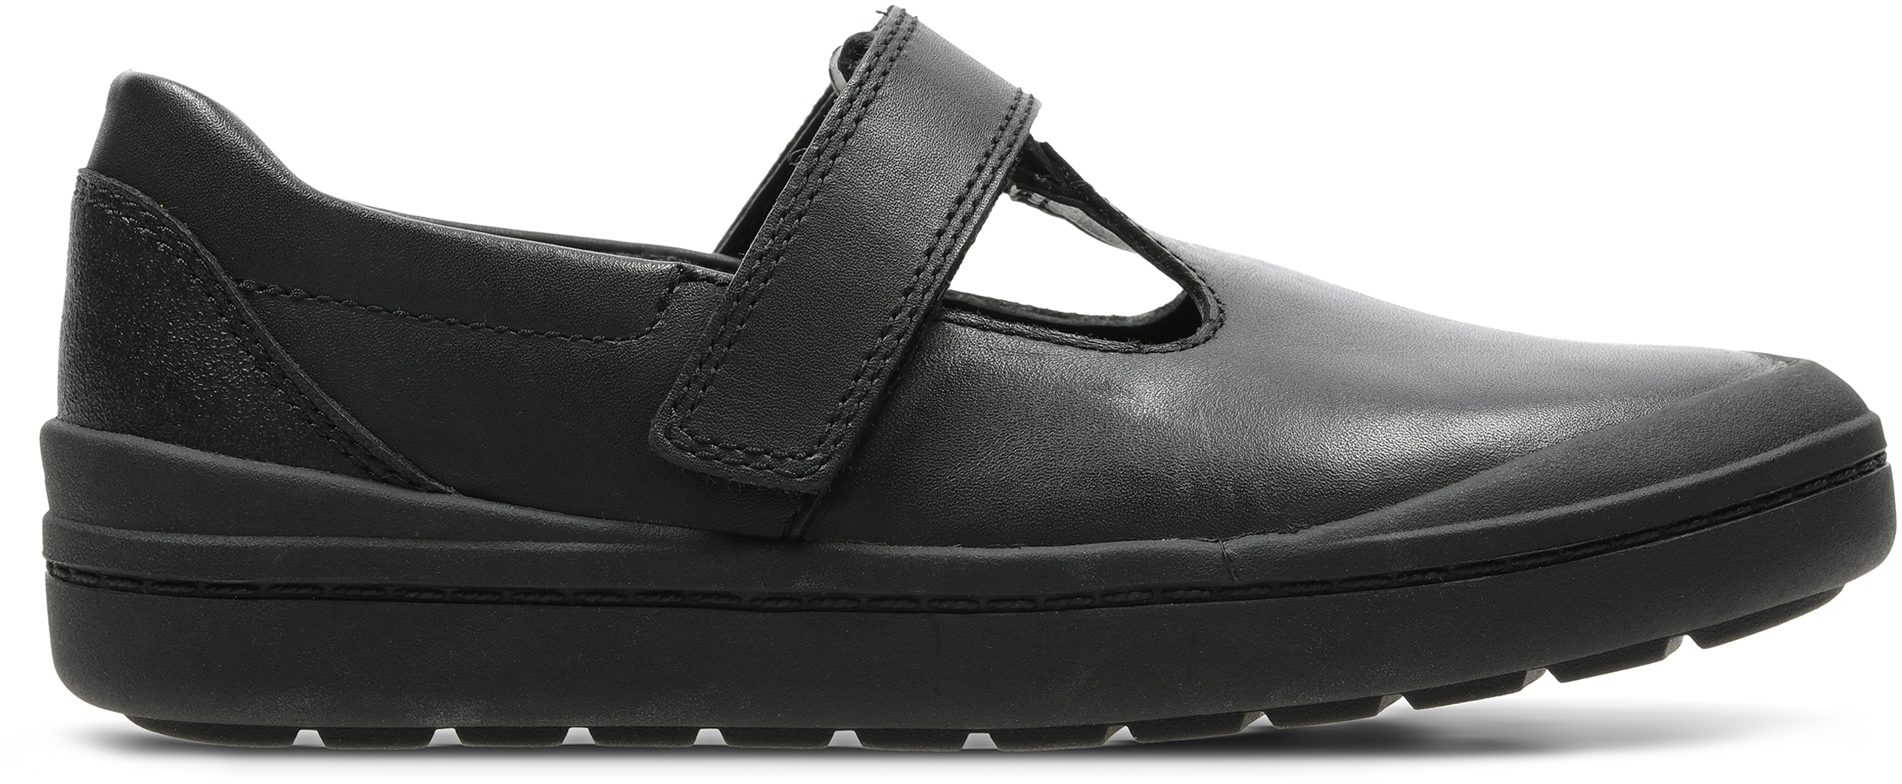 Clarks Rock Move Kids Black Leather 26140648 - Girls School Shoes ...